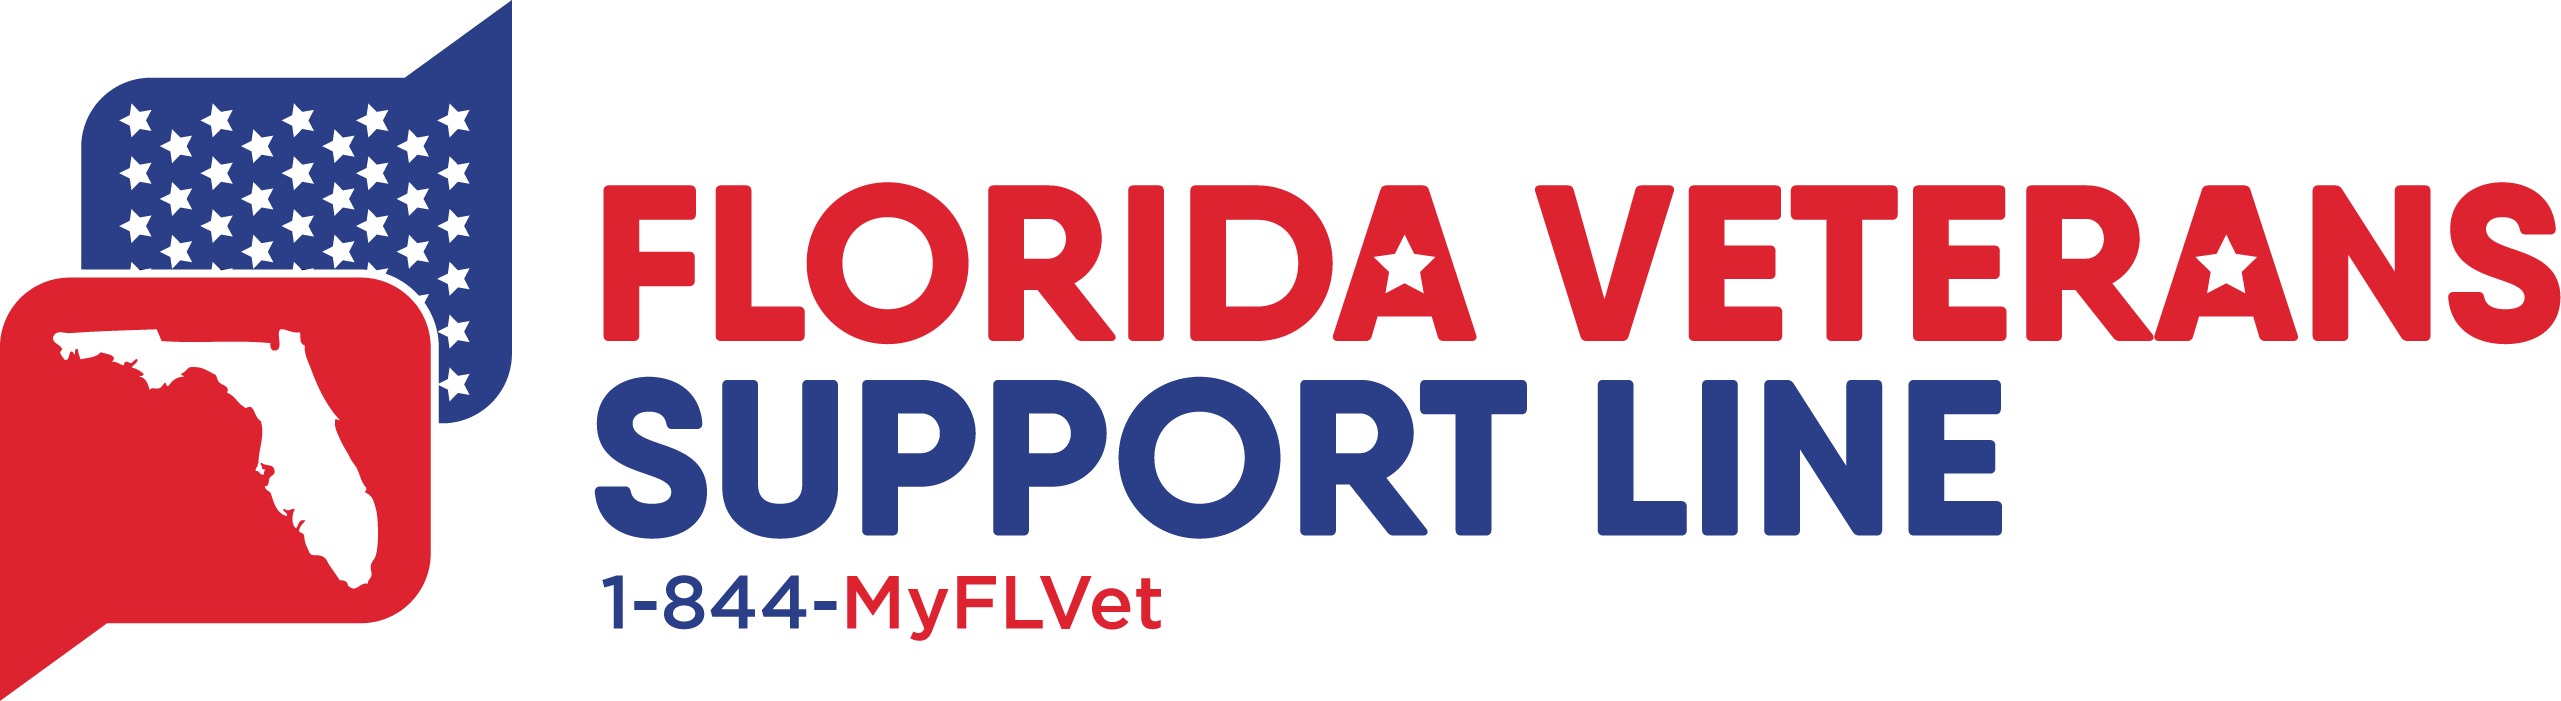 florida veteran support line